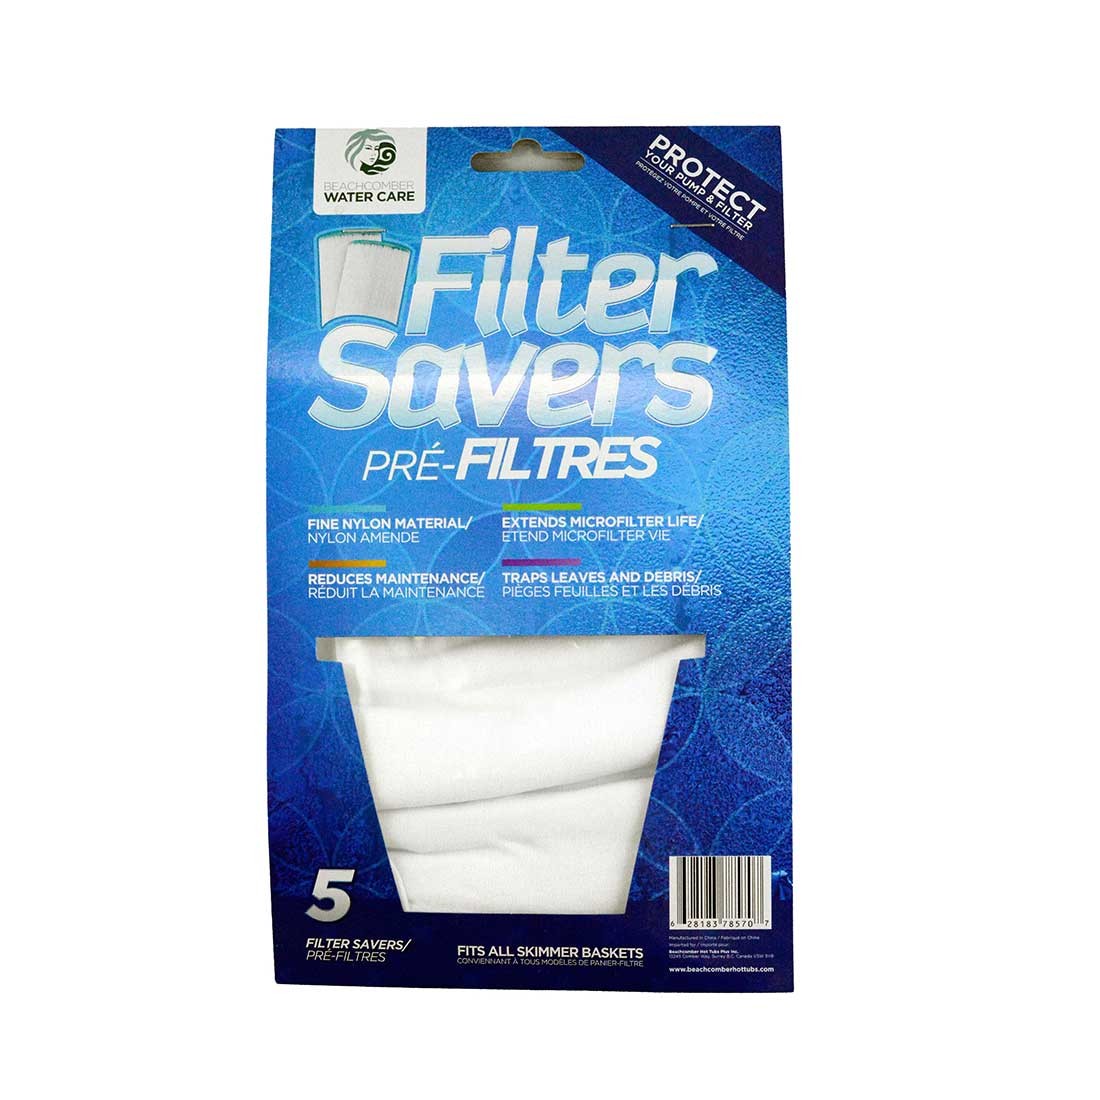 Beachcomber filter savers for hot tubs